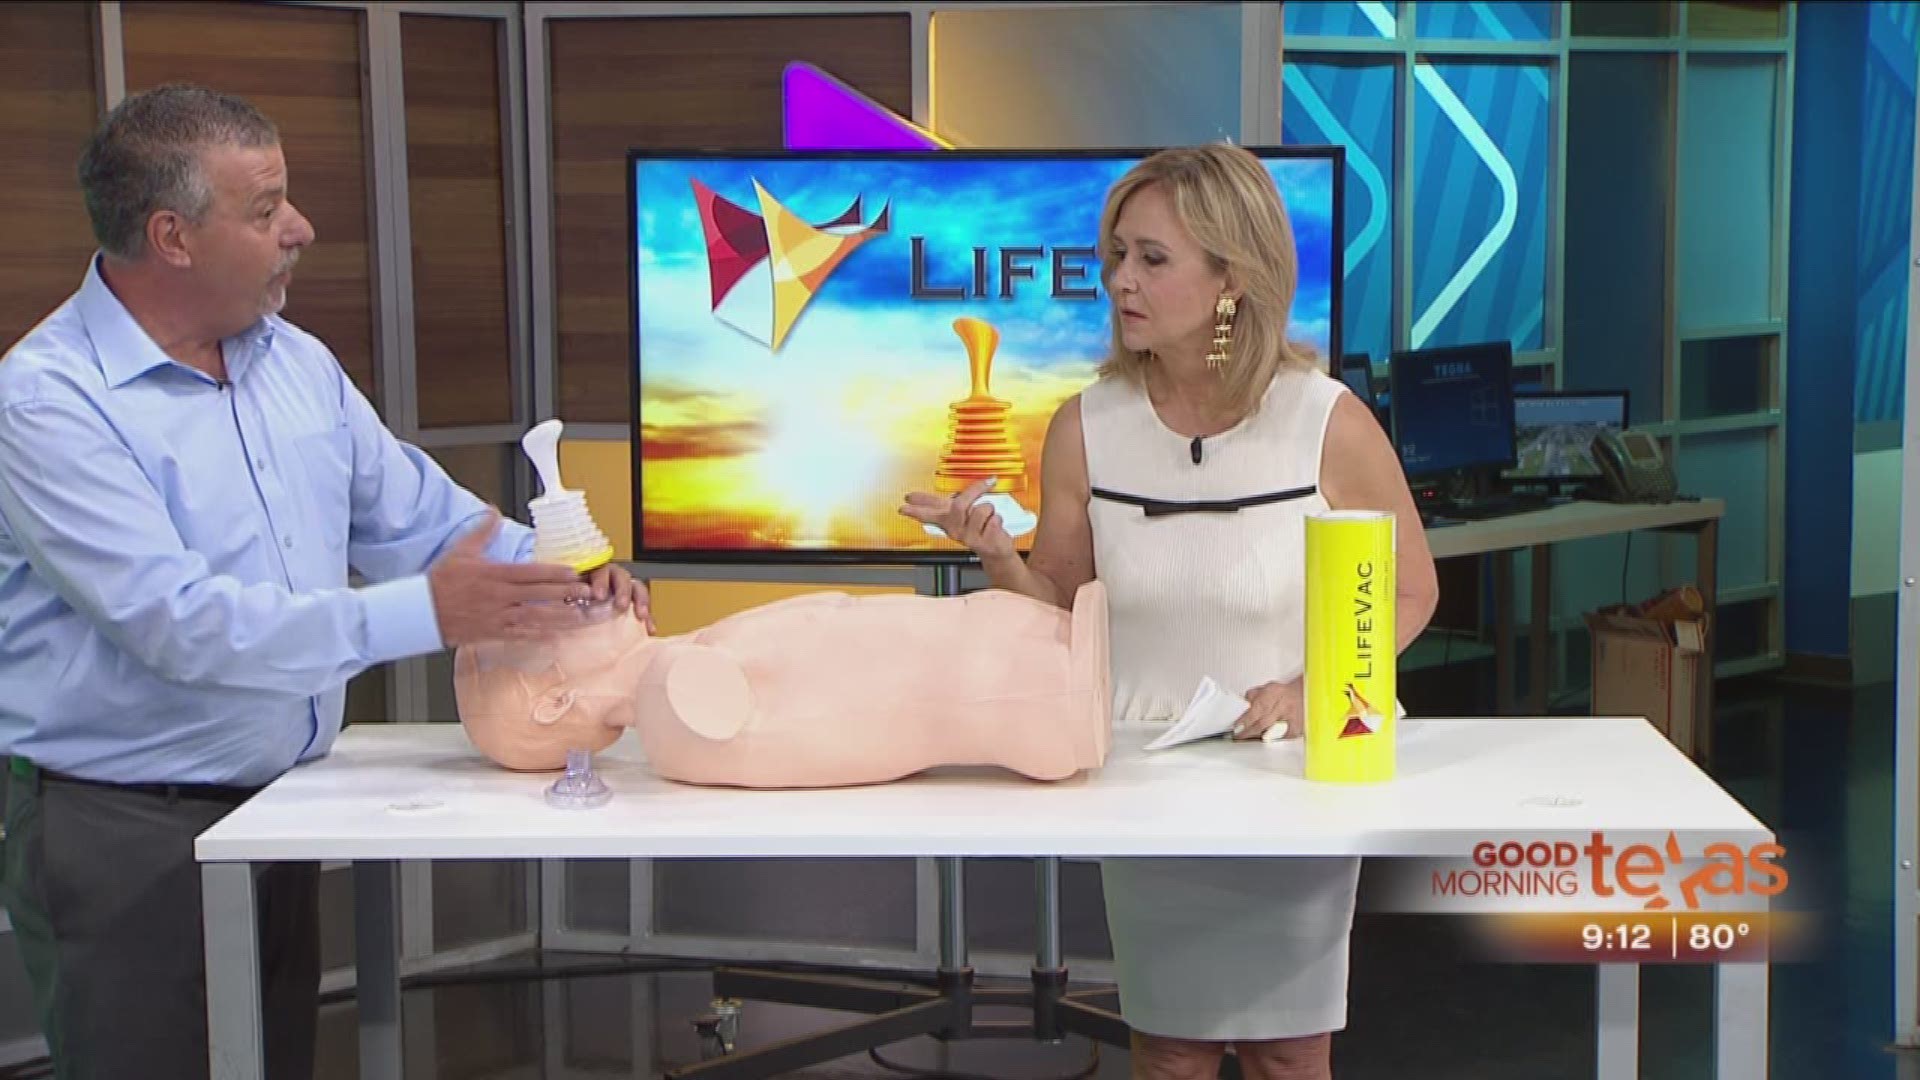 LifeVac  This anti-choking device can save lives 